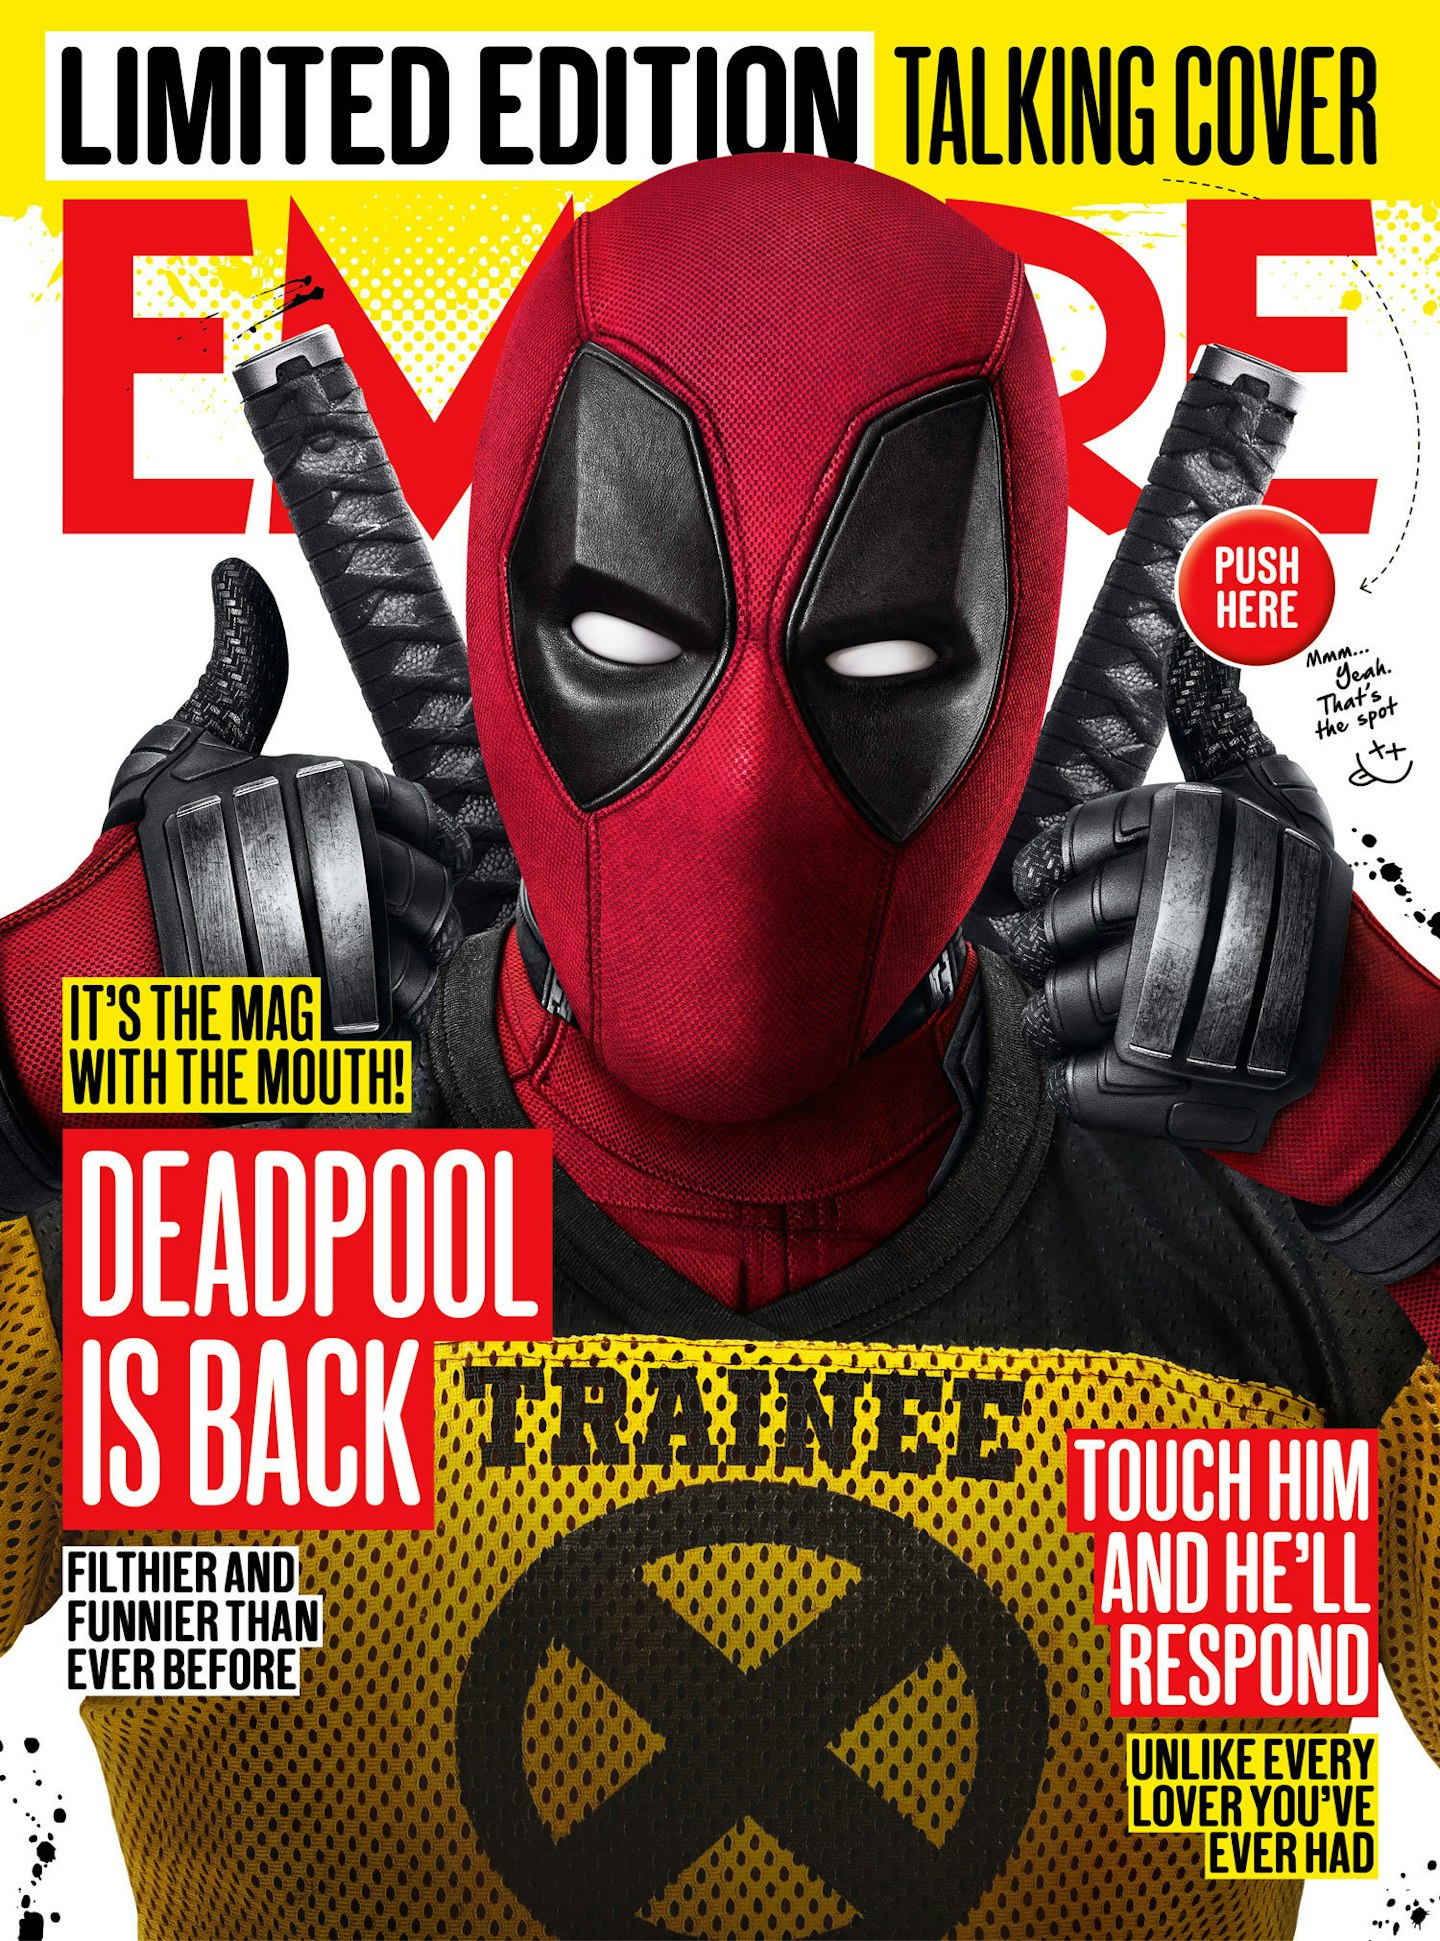 Deadpool Talking Cover - Empire